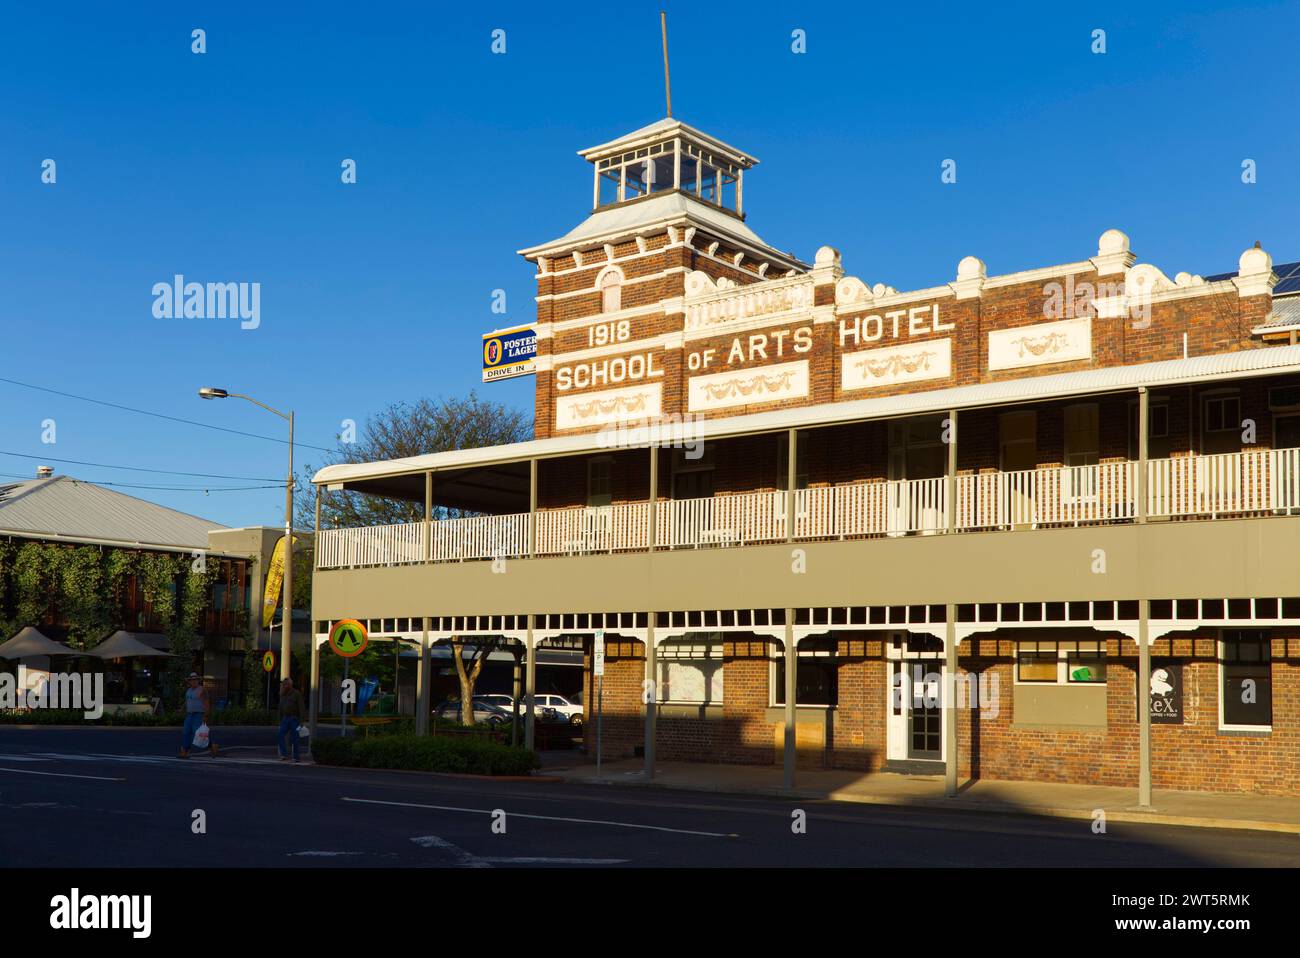 Lo storico School of Arts Hotel (1918) in McDowall Street Roma Queensland Australia Foto Stock